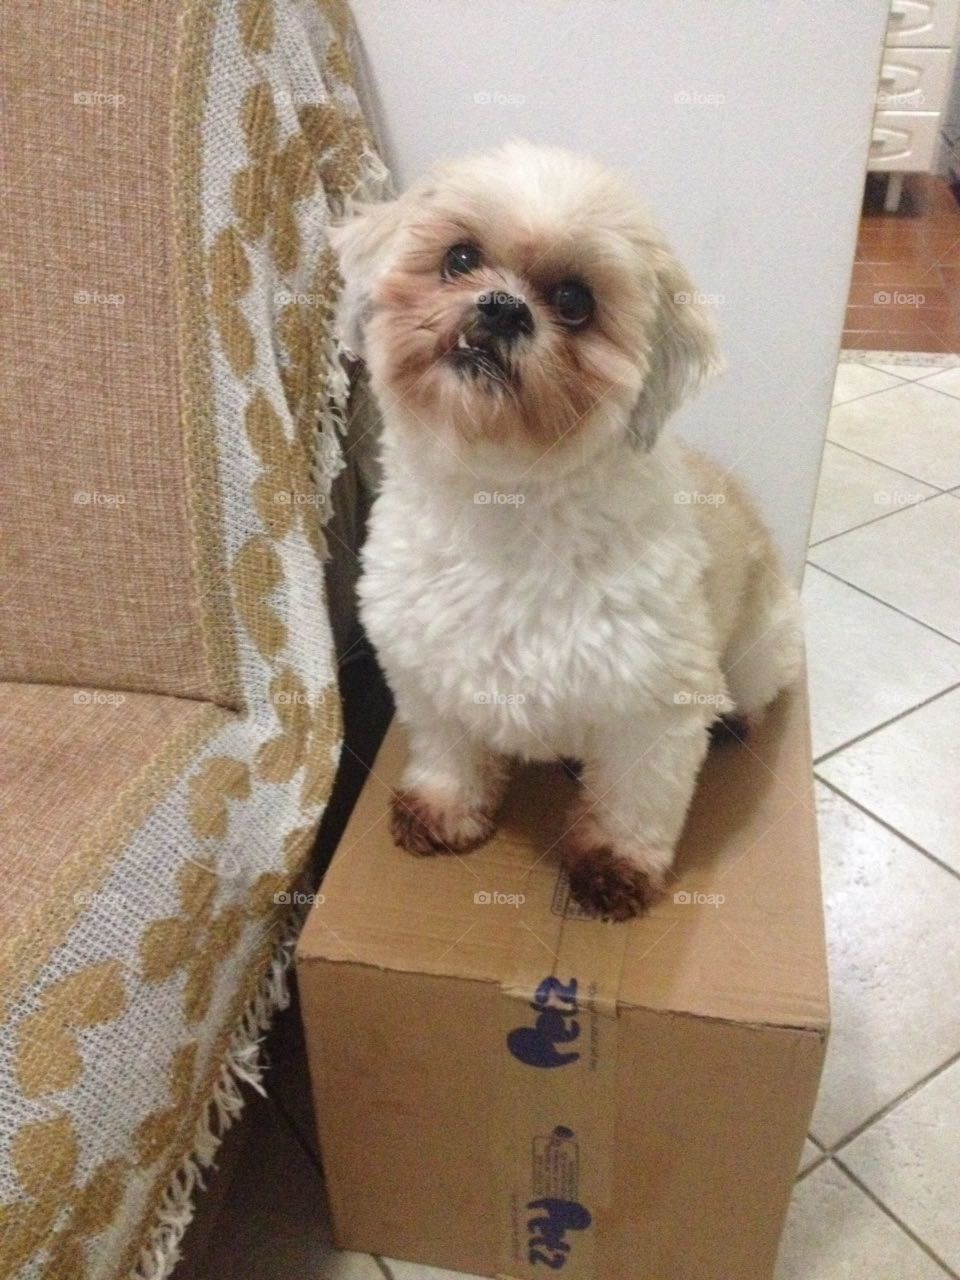 Dog on the box